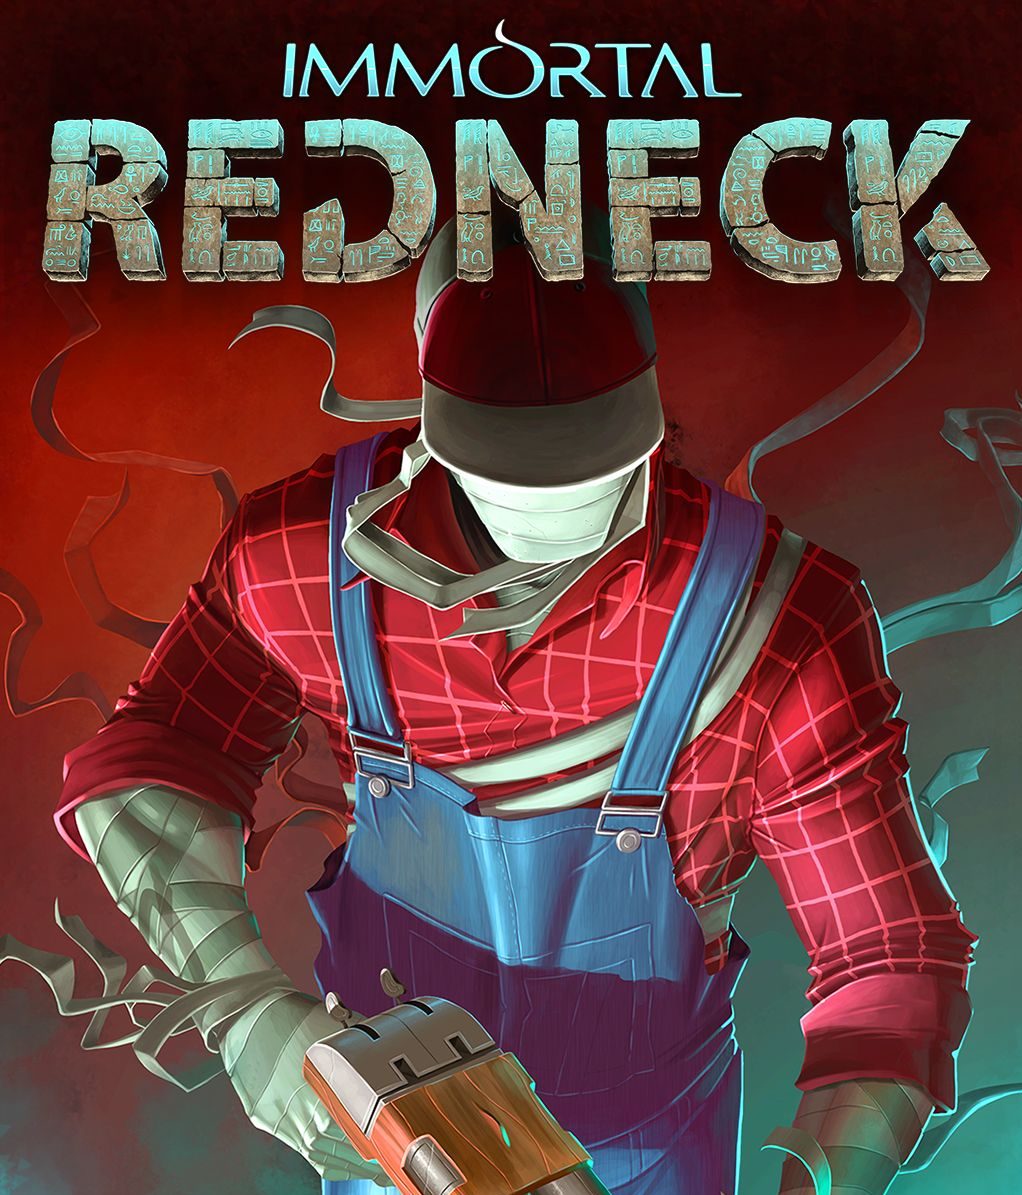 Immortal Redneck